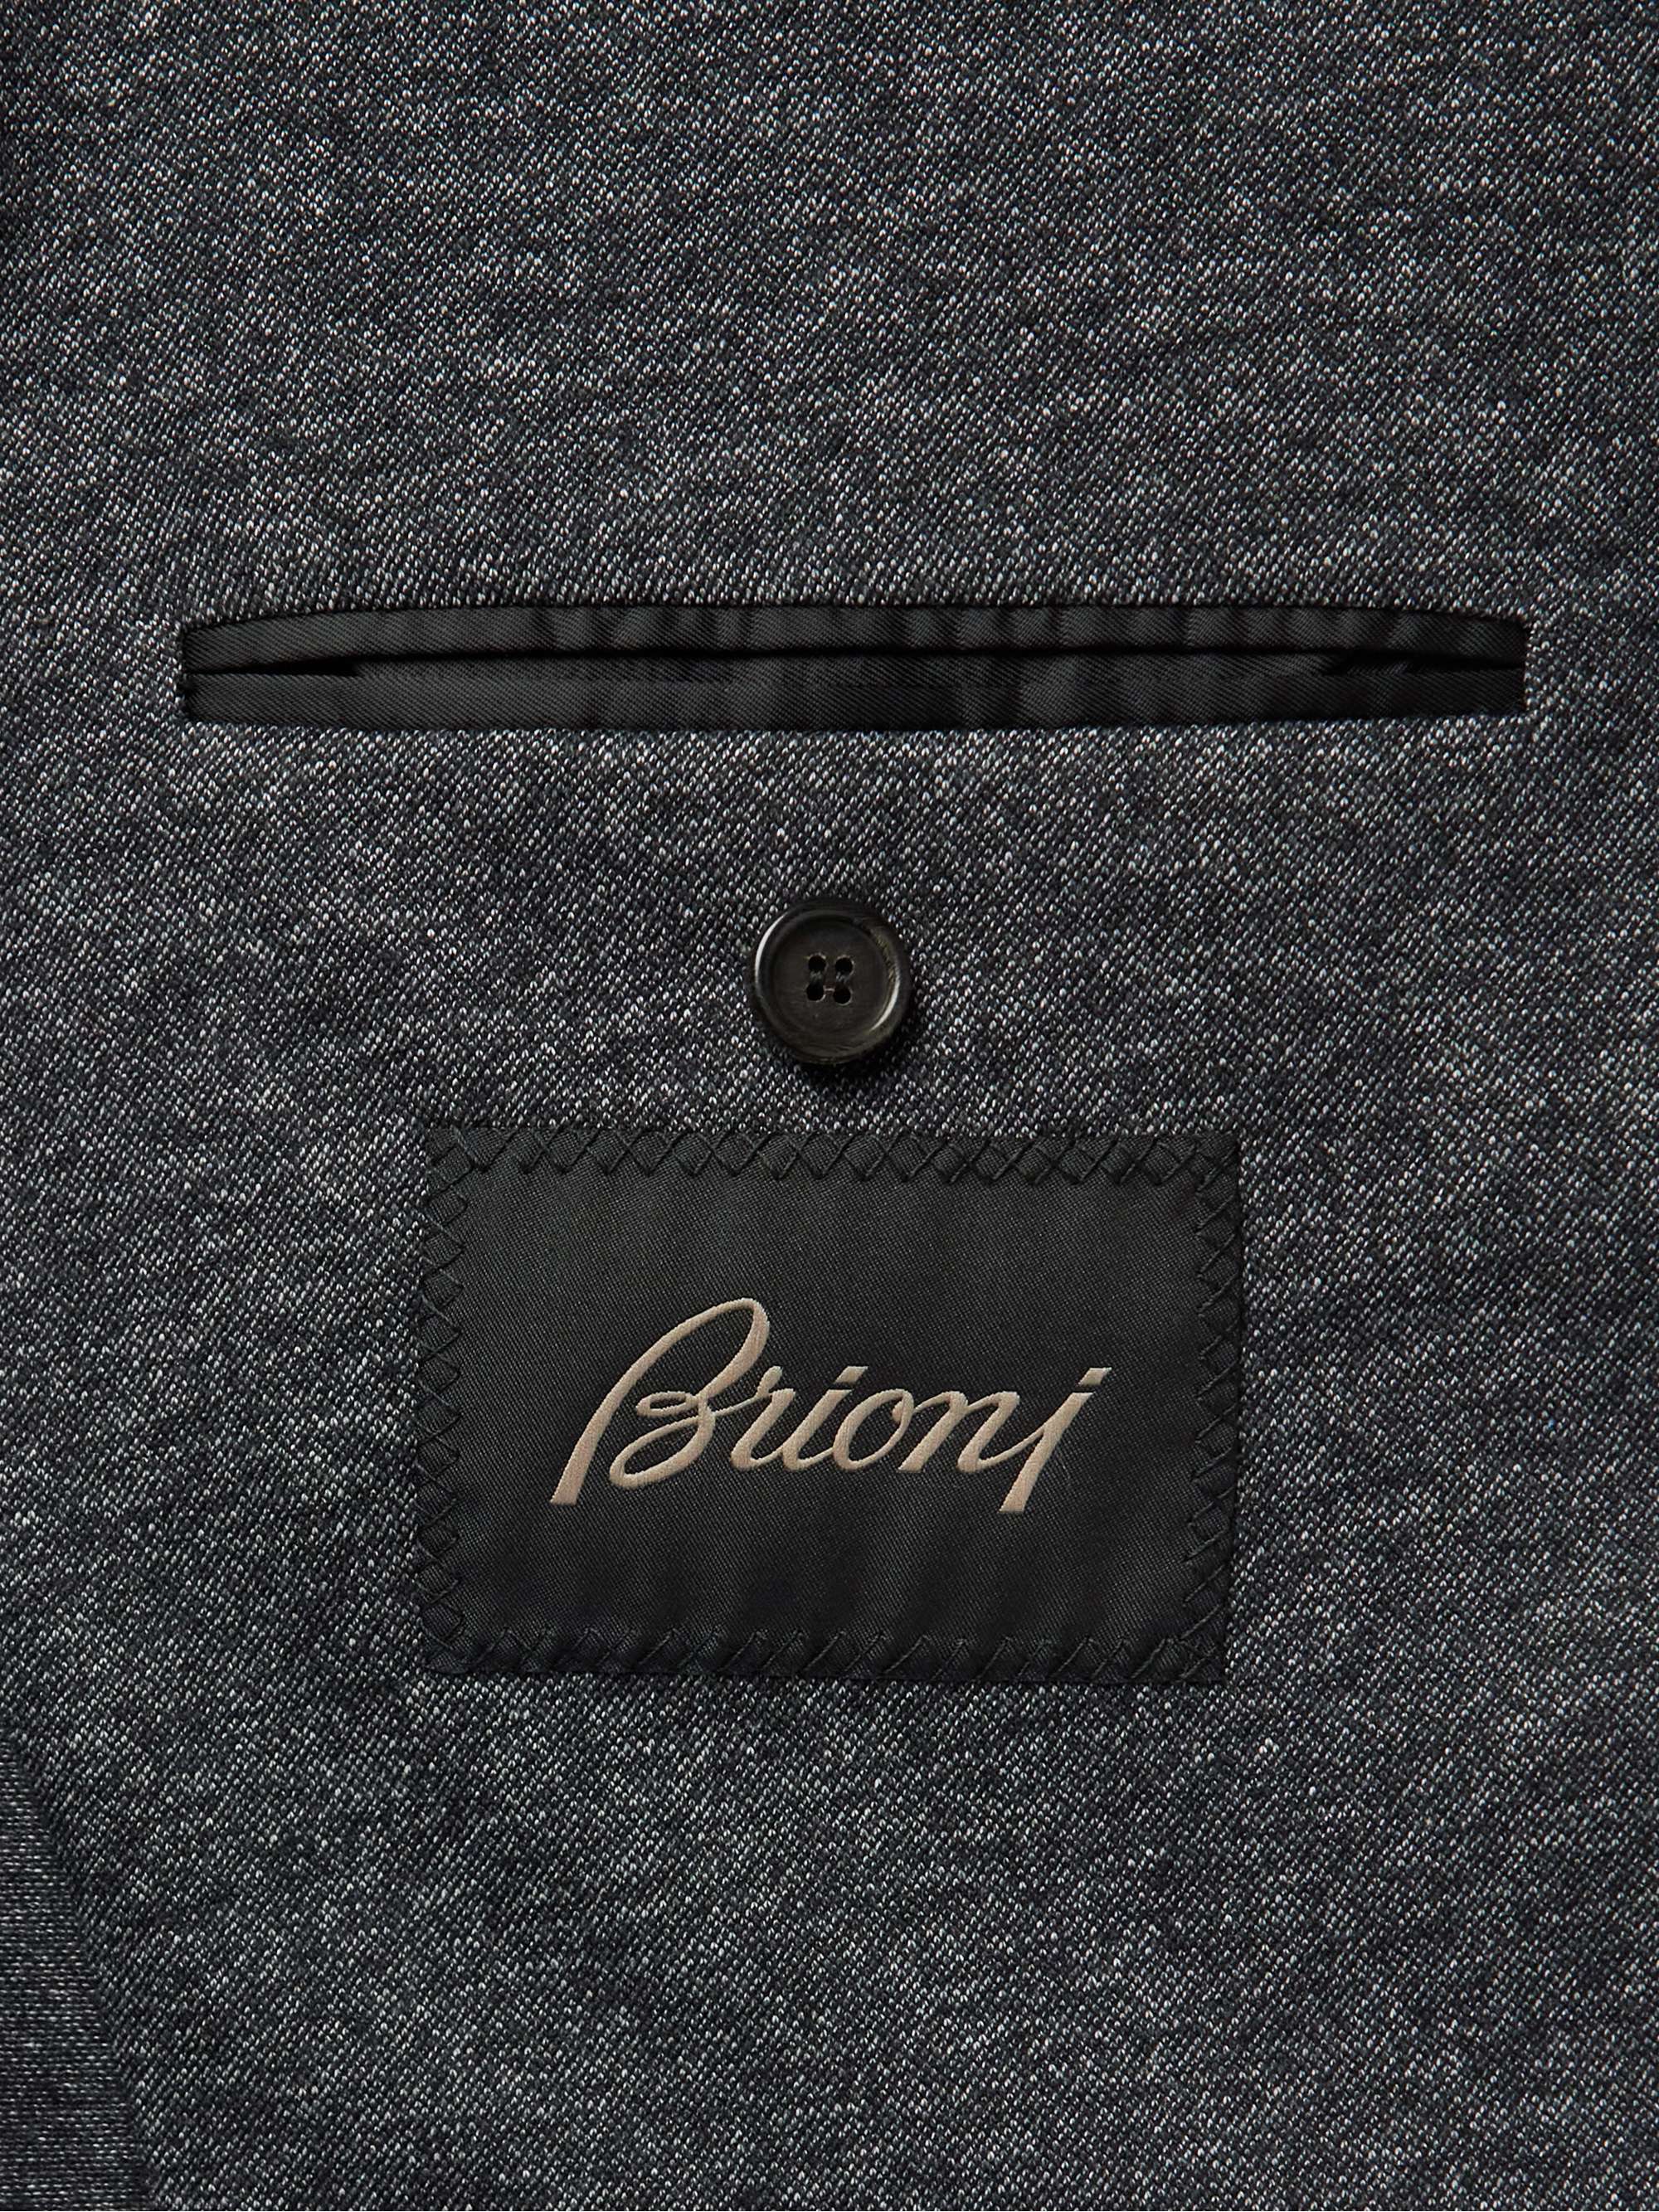 BRIONI Cashmere and Cotton-Blend Blazer